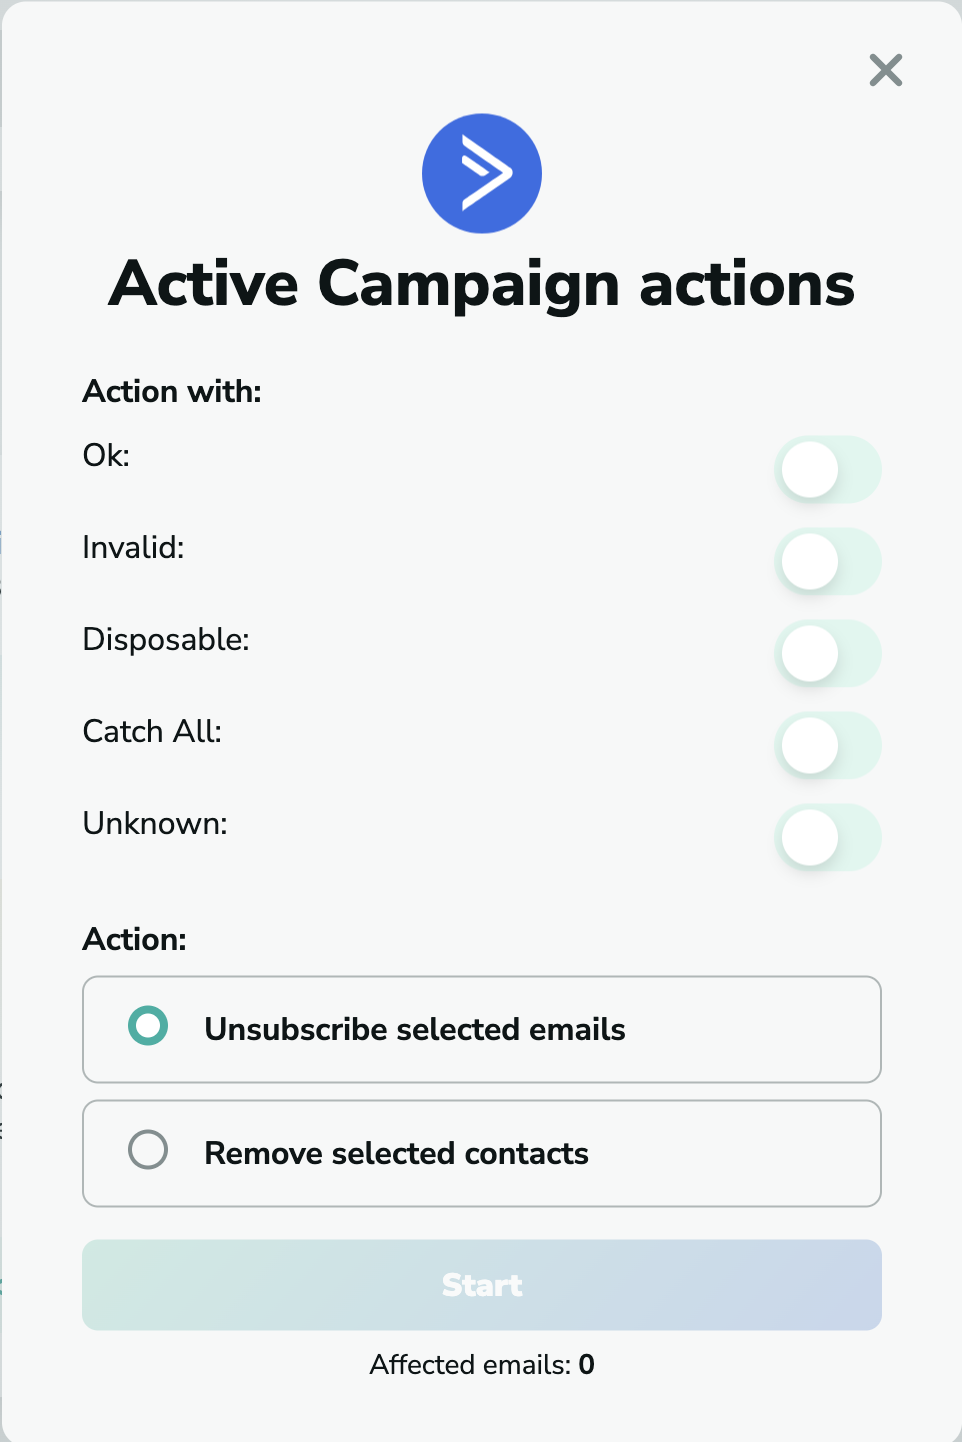 Active Campaign actions in MillionVerifier